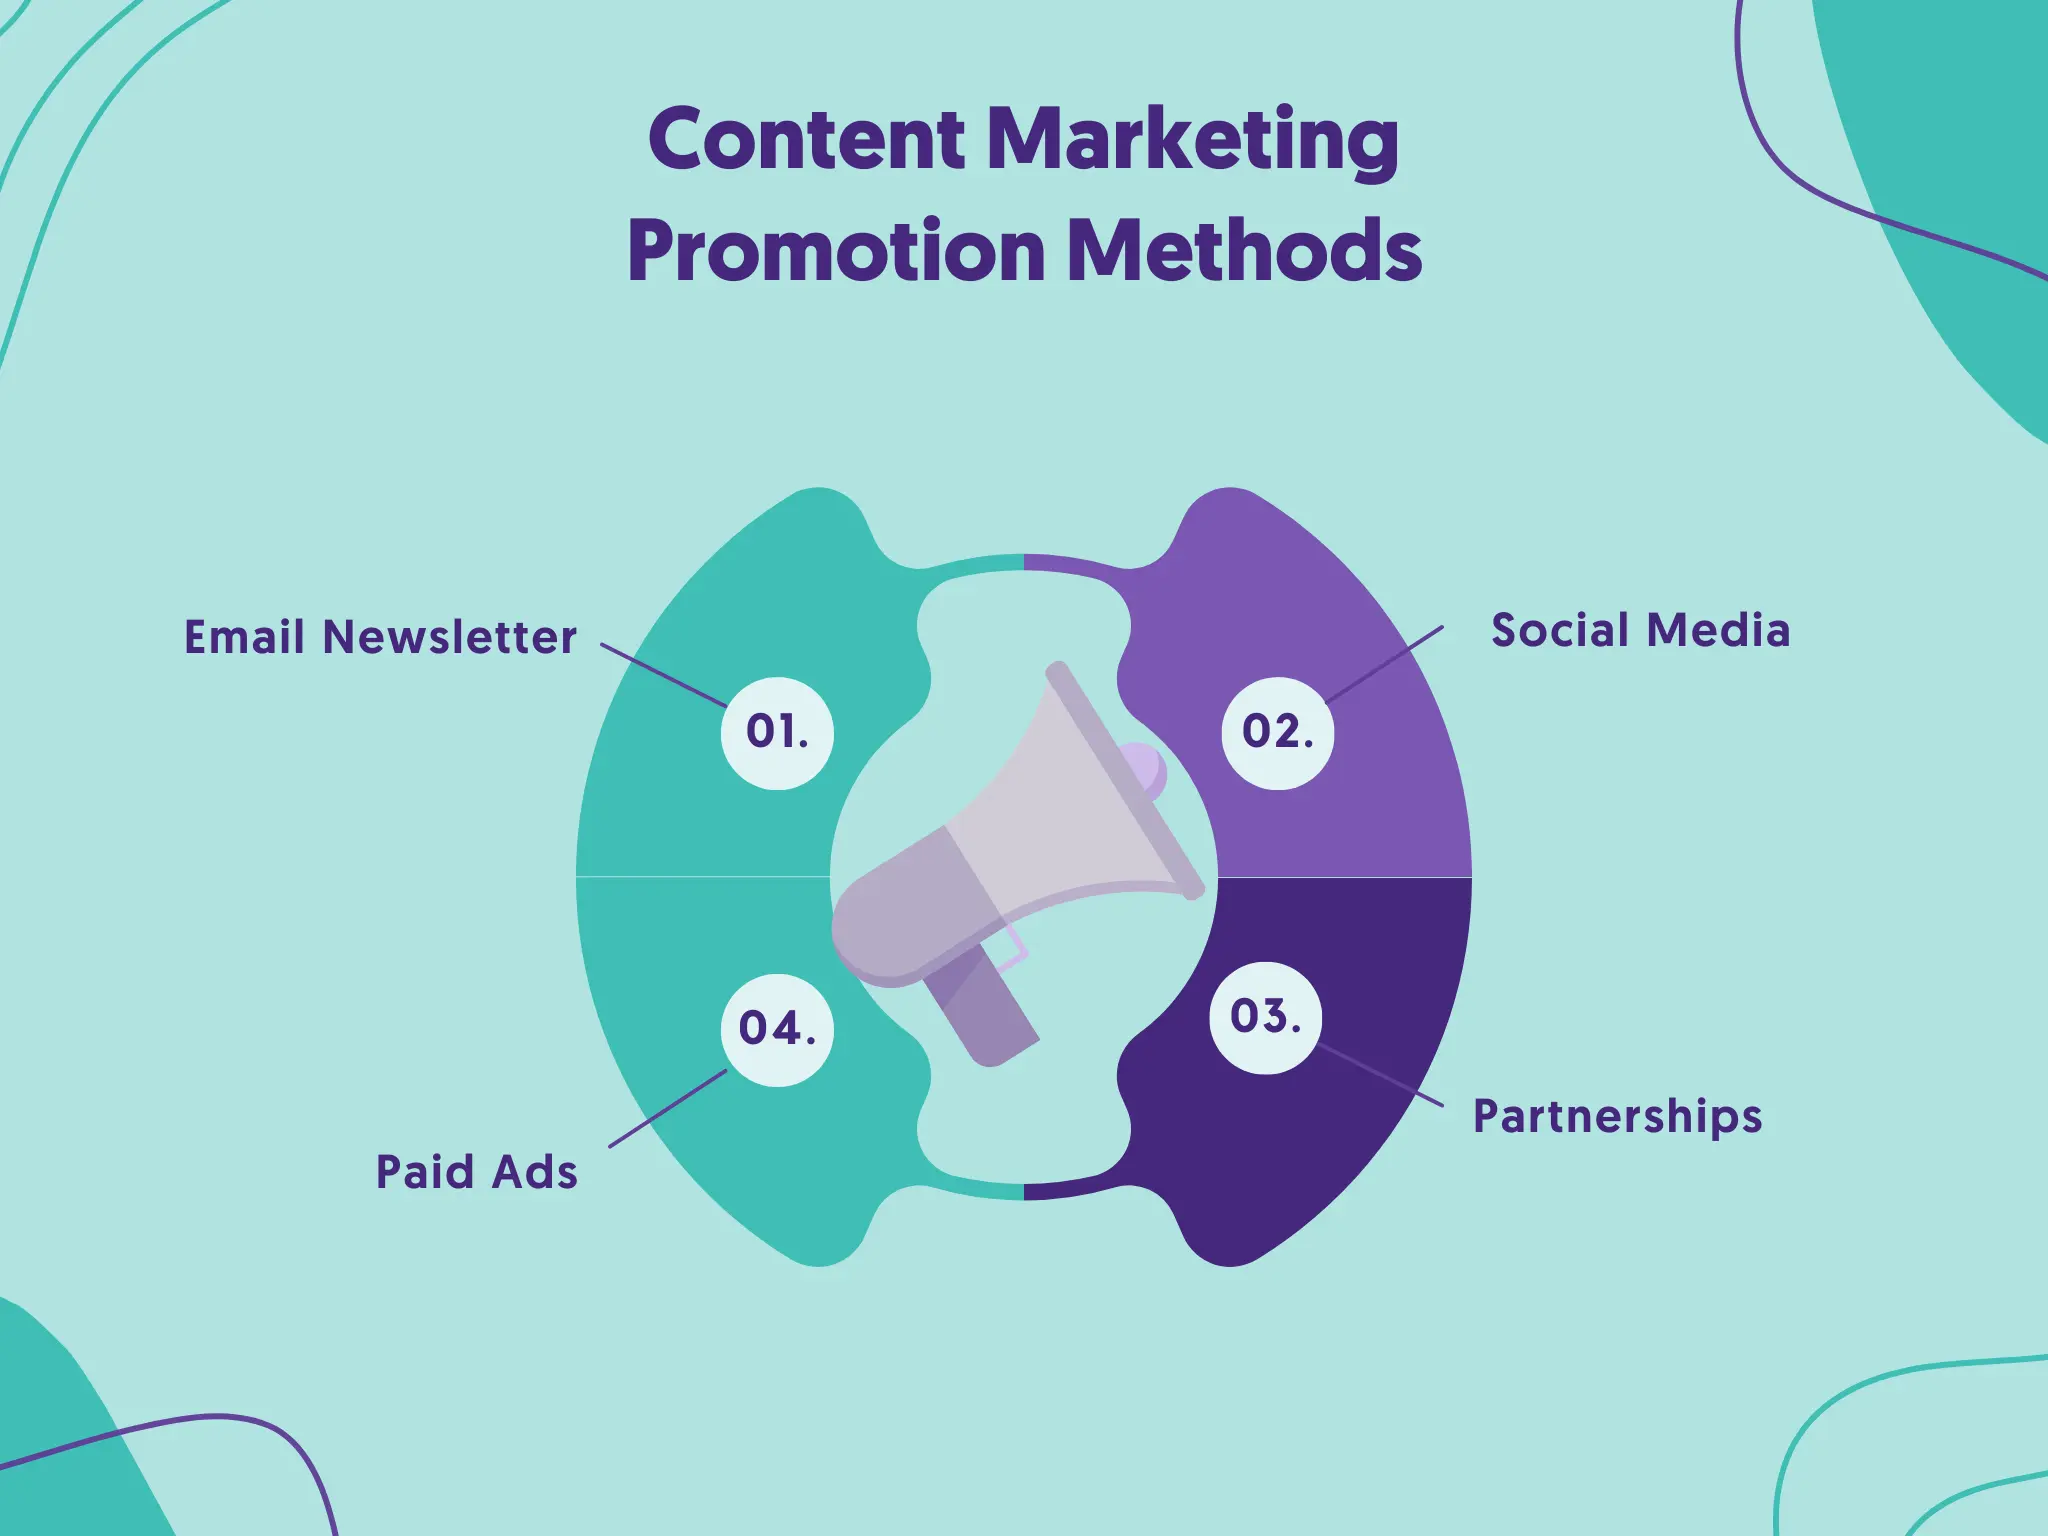 Content Marketing Promotion Methods